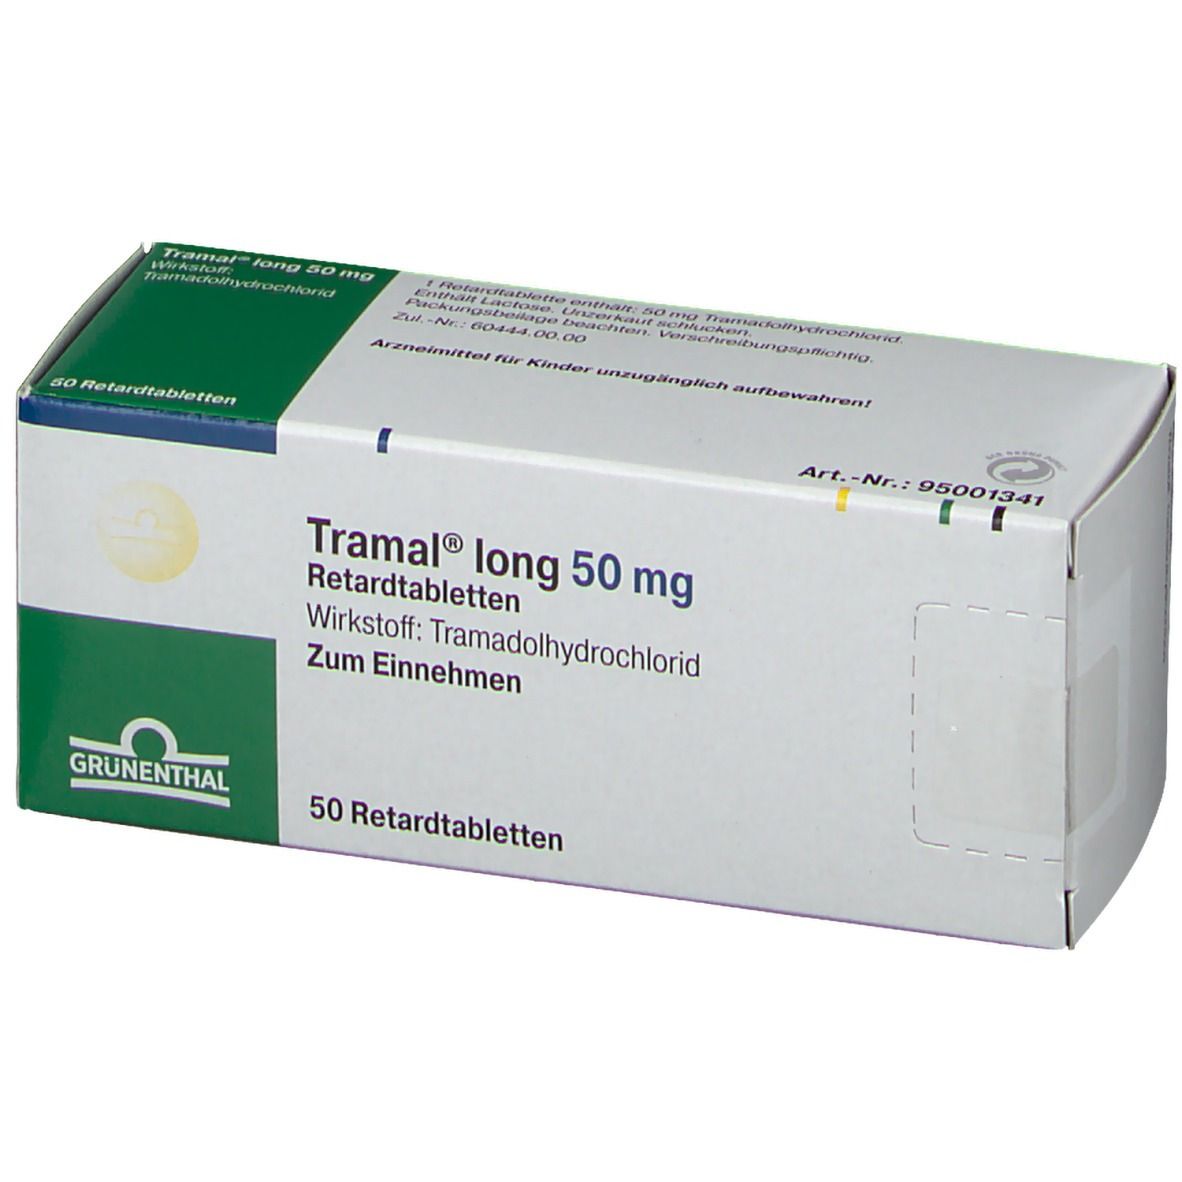 Tramal® long 50 mg